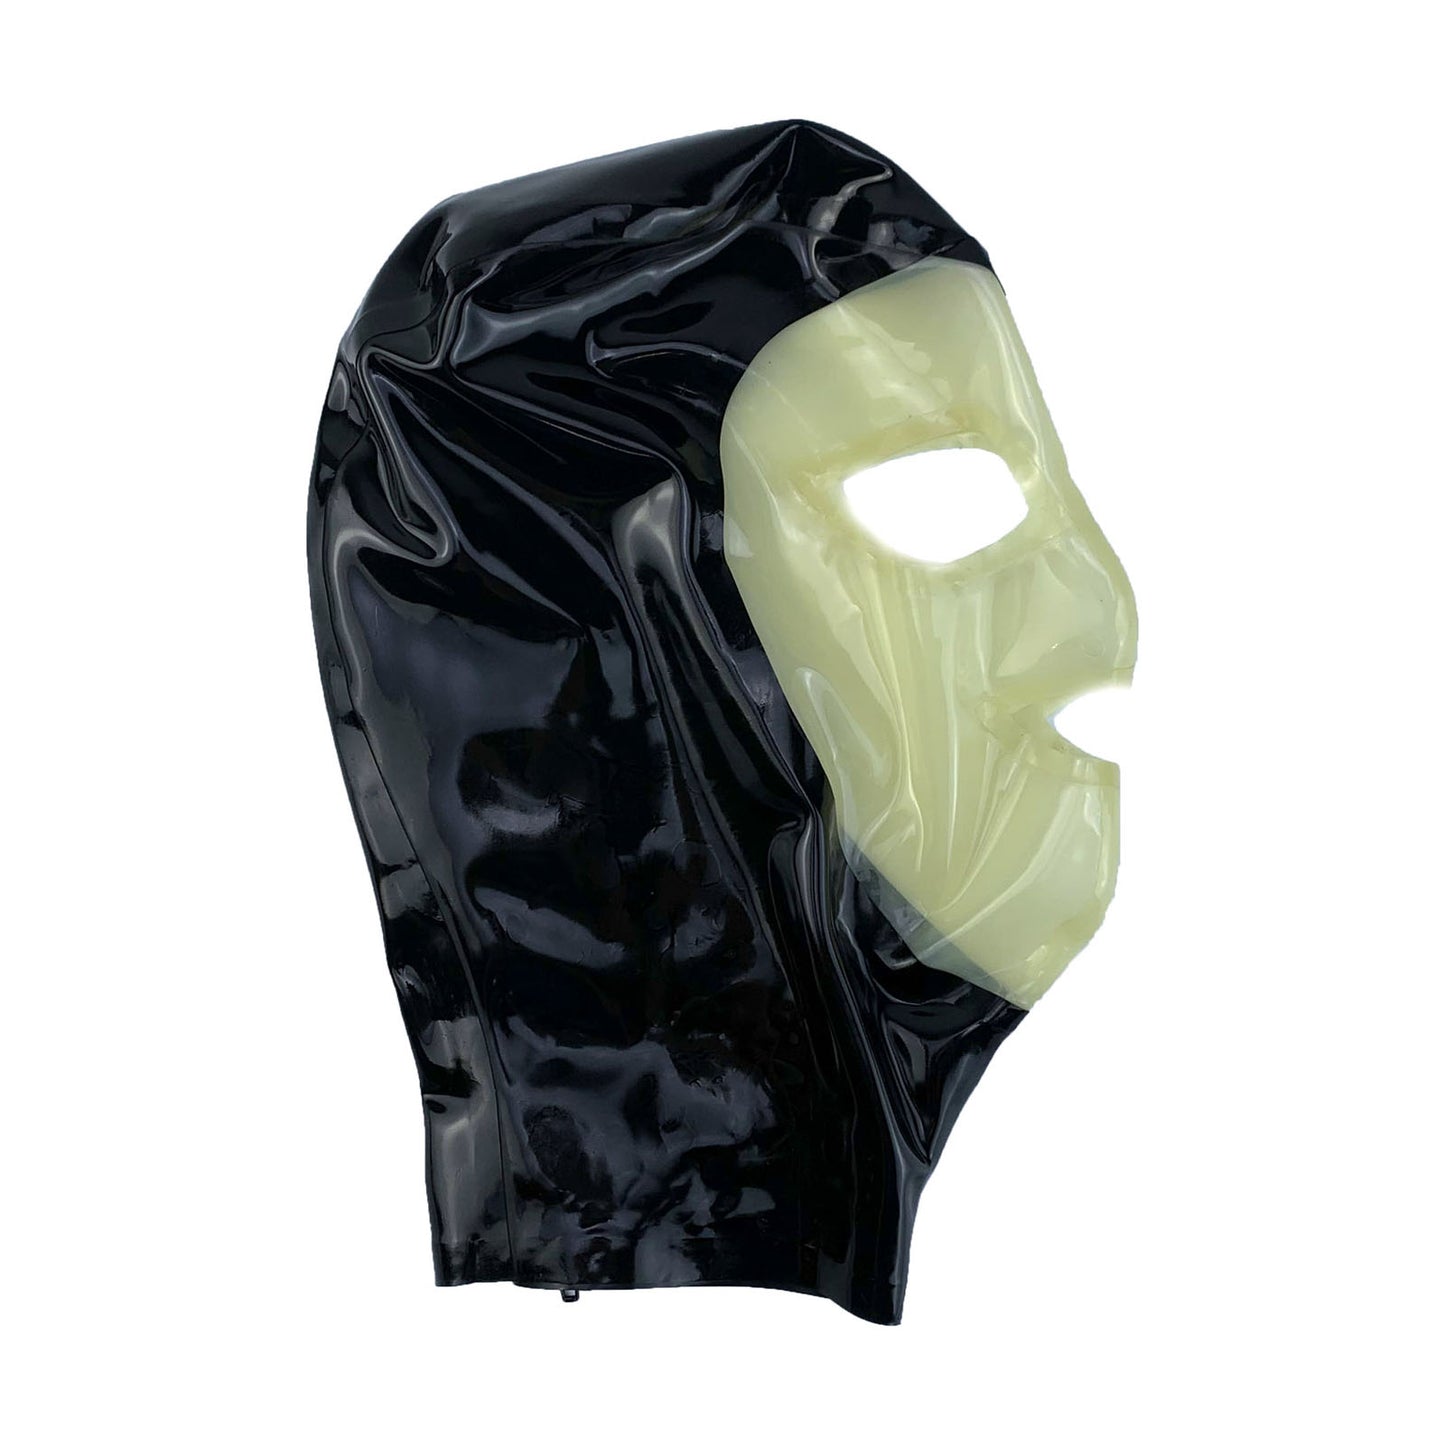 MONNIK Full Cover Latex Hood Funny Mask Open Eyes&Mouth Black&Transparent with Rear Zipper Handmade